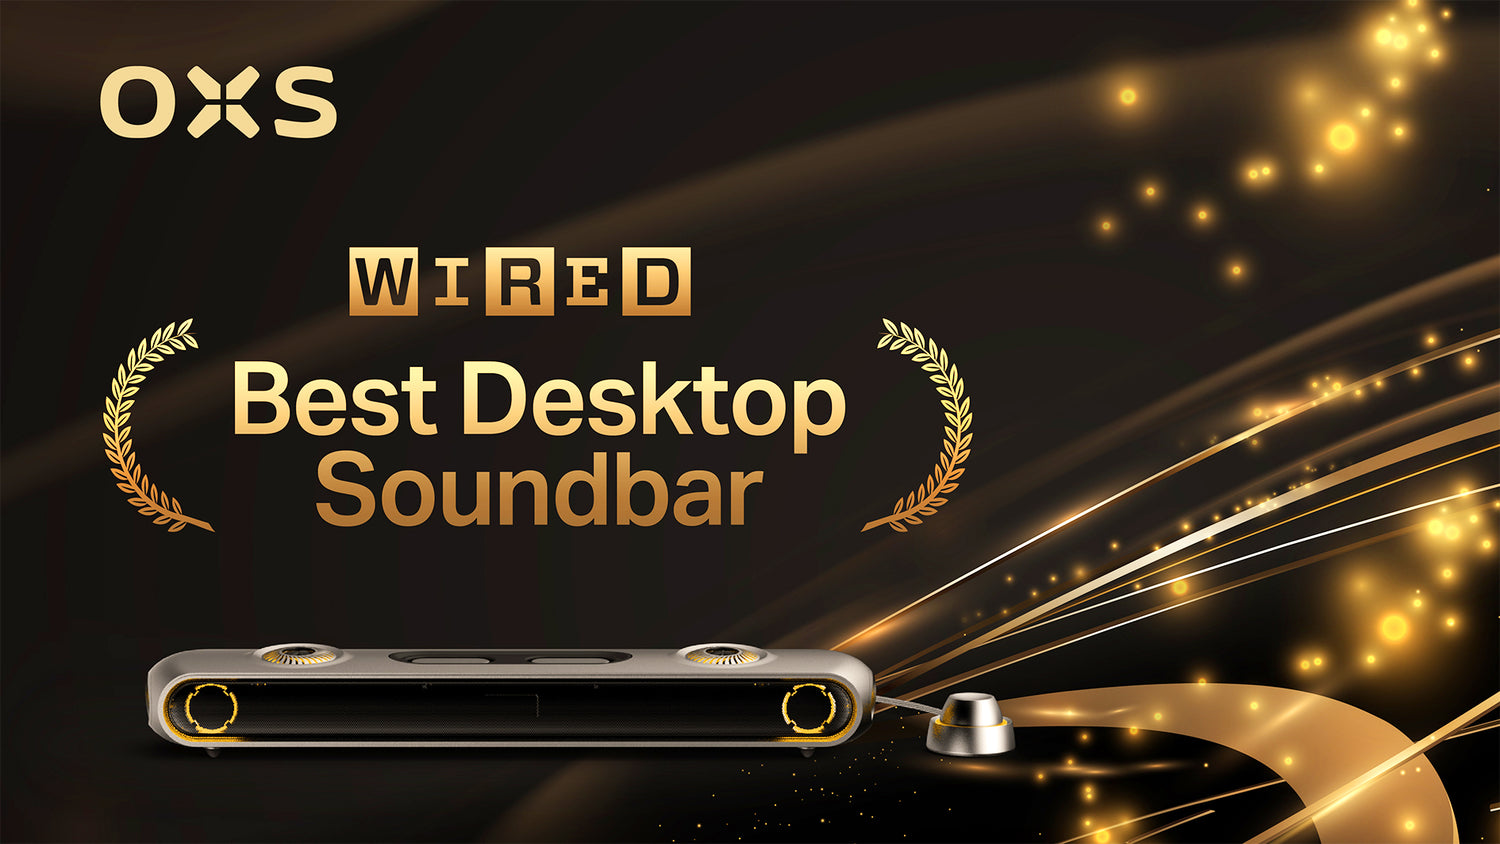 WIRED's Top Pick: "Best Desktop Soundbar" OXS Thunder Pro Shines in Sound Quality